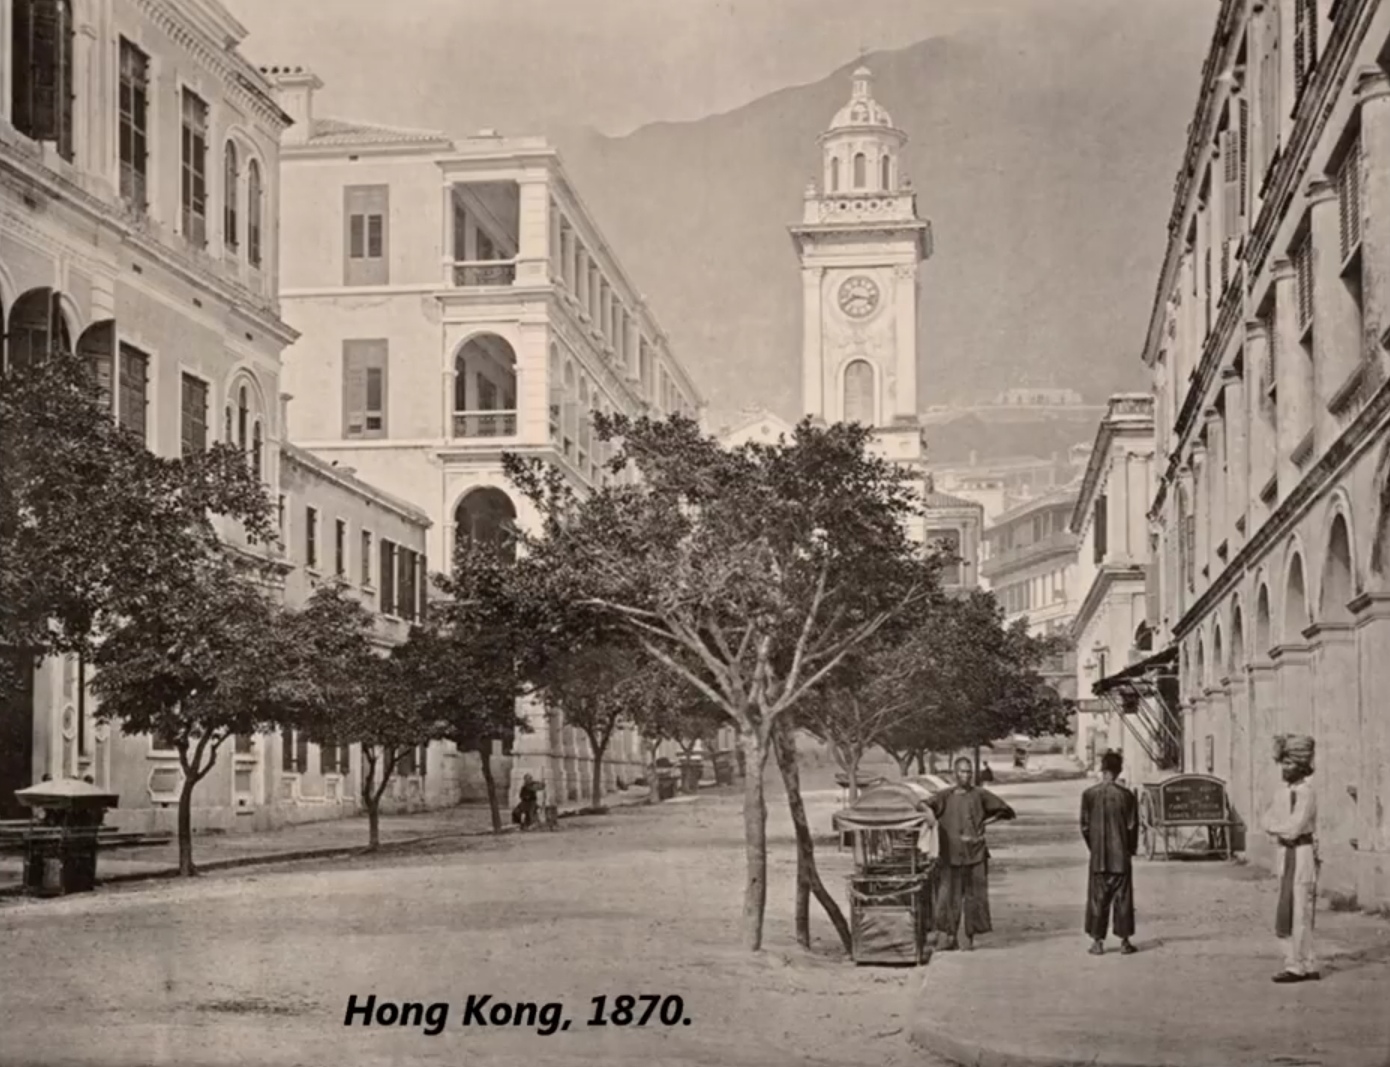 hong kong 1870s - Hong Kong, 1870.